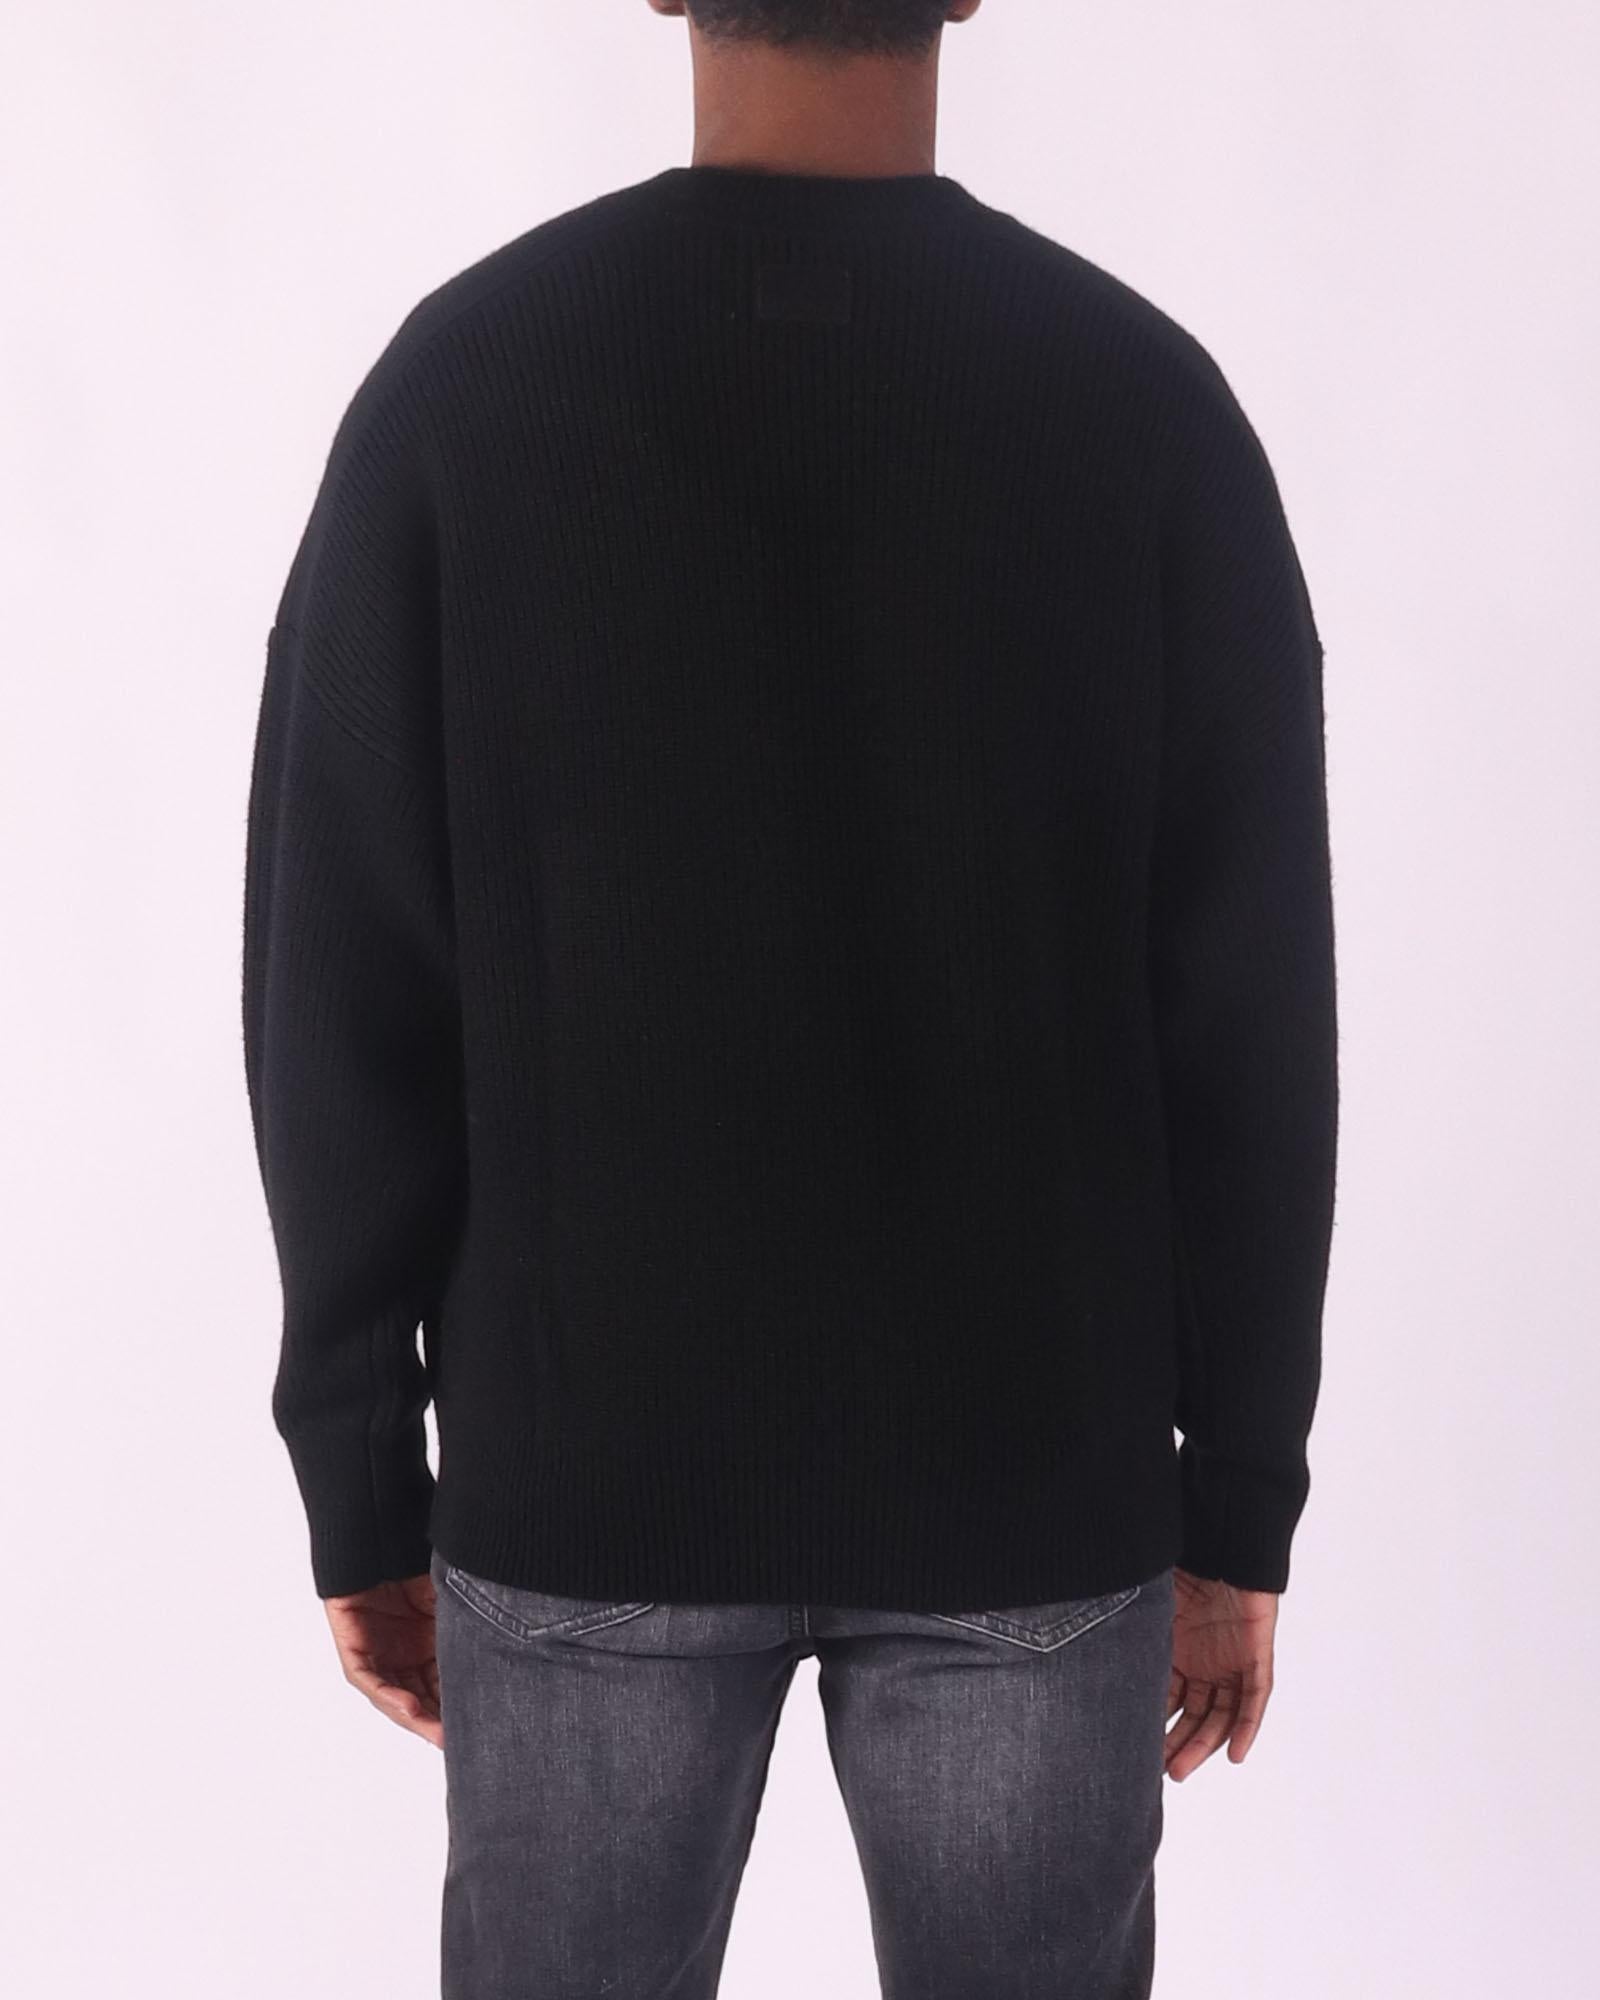 Marant Truien / Sweaters